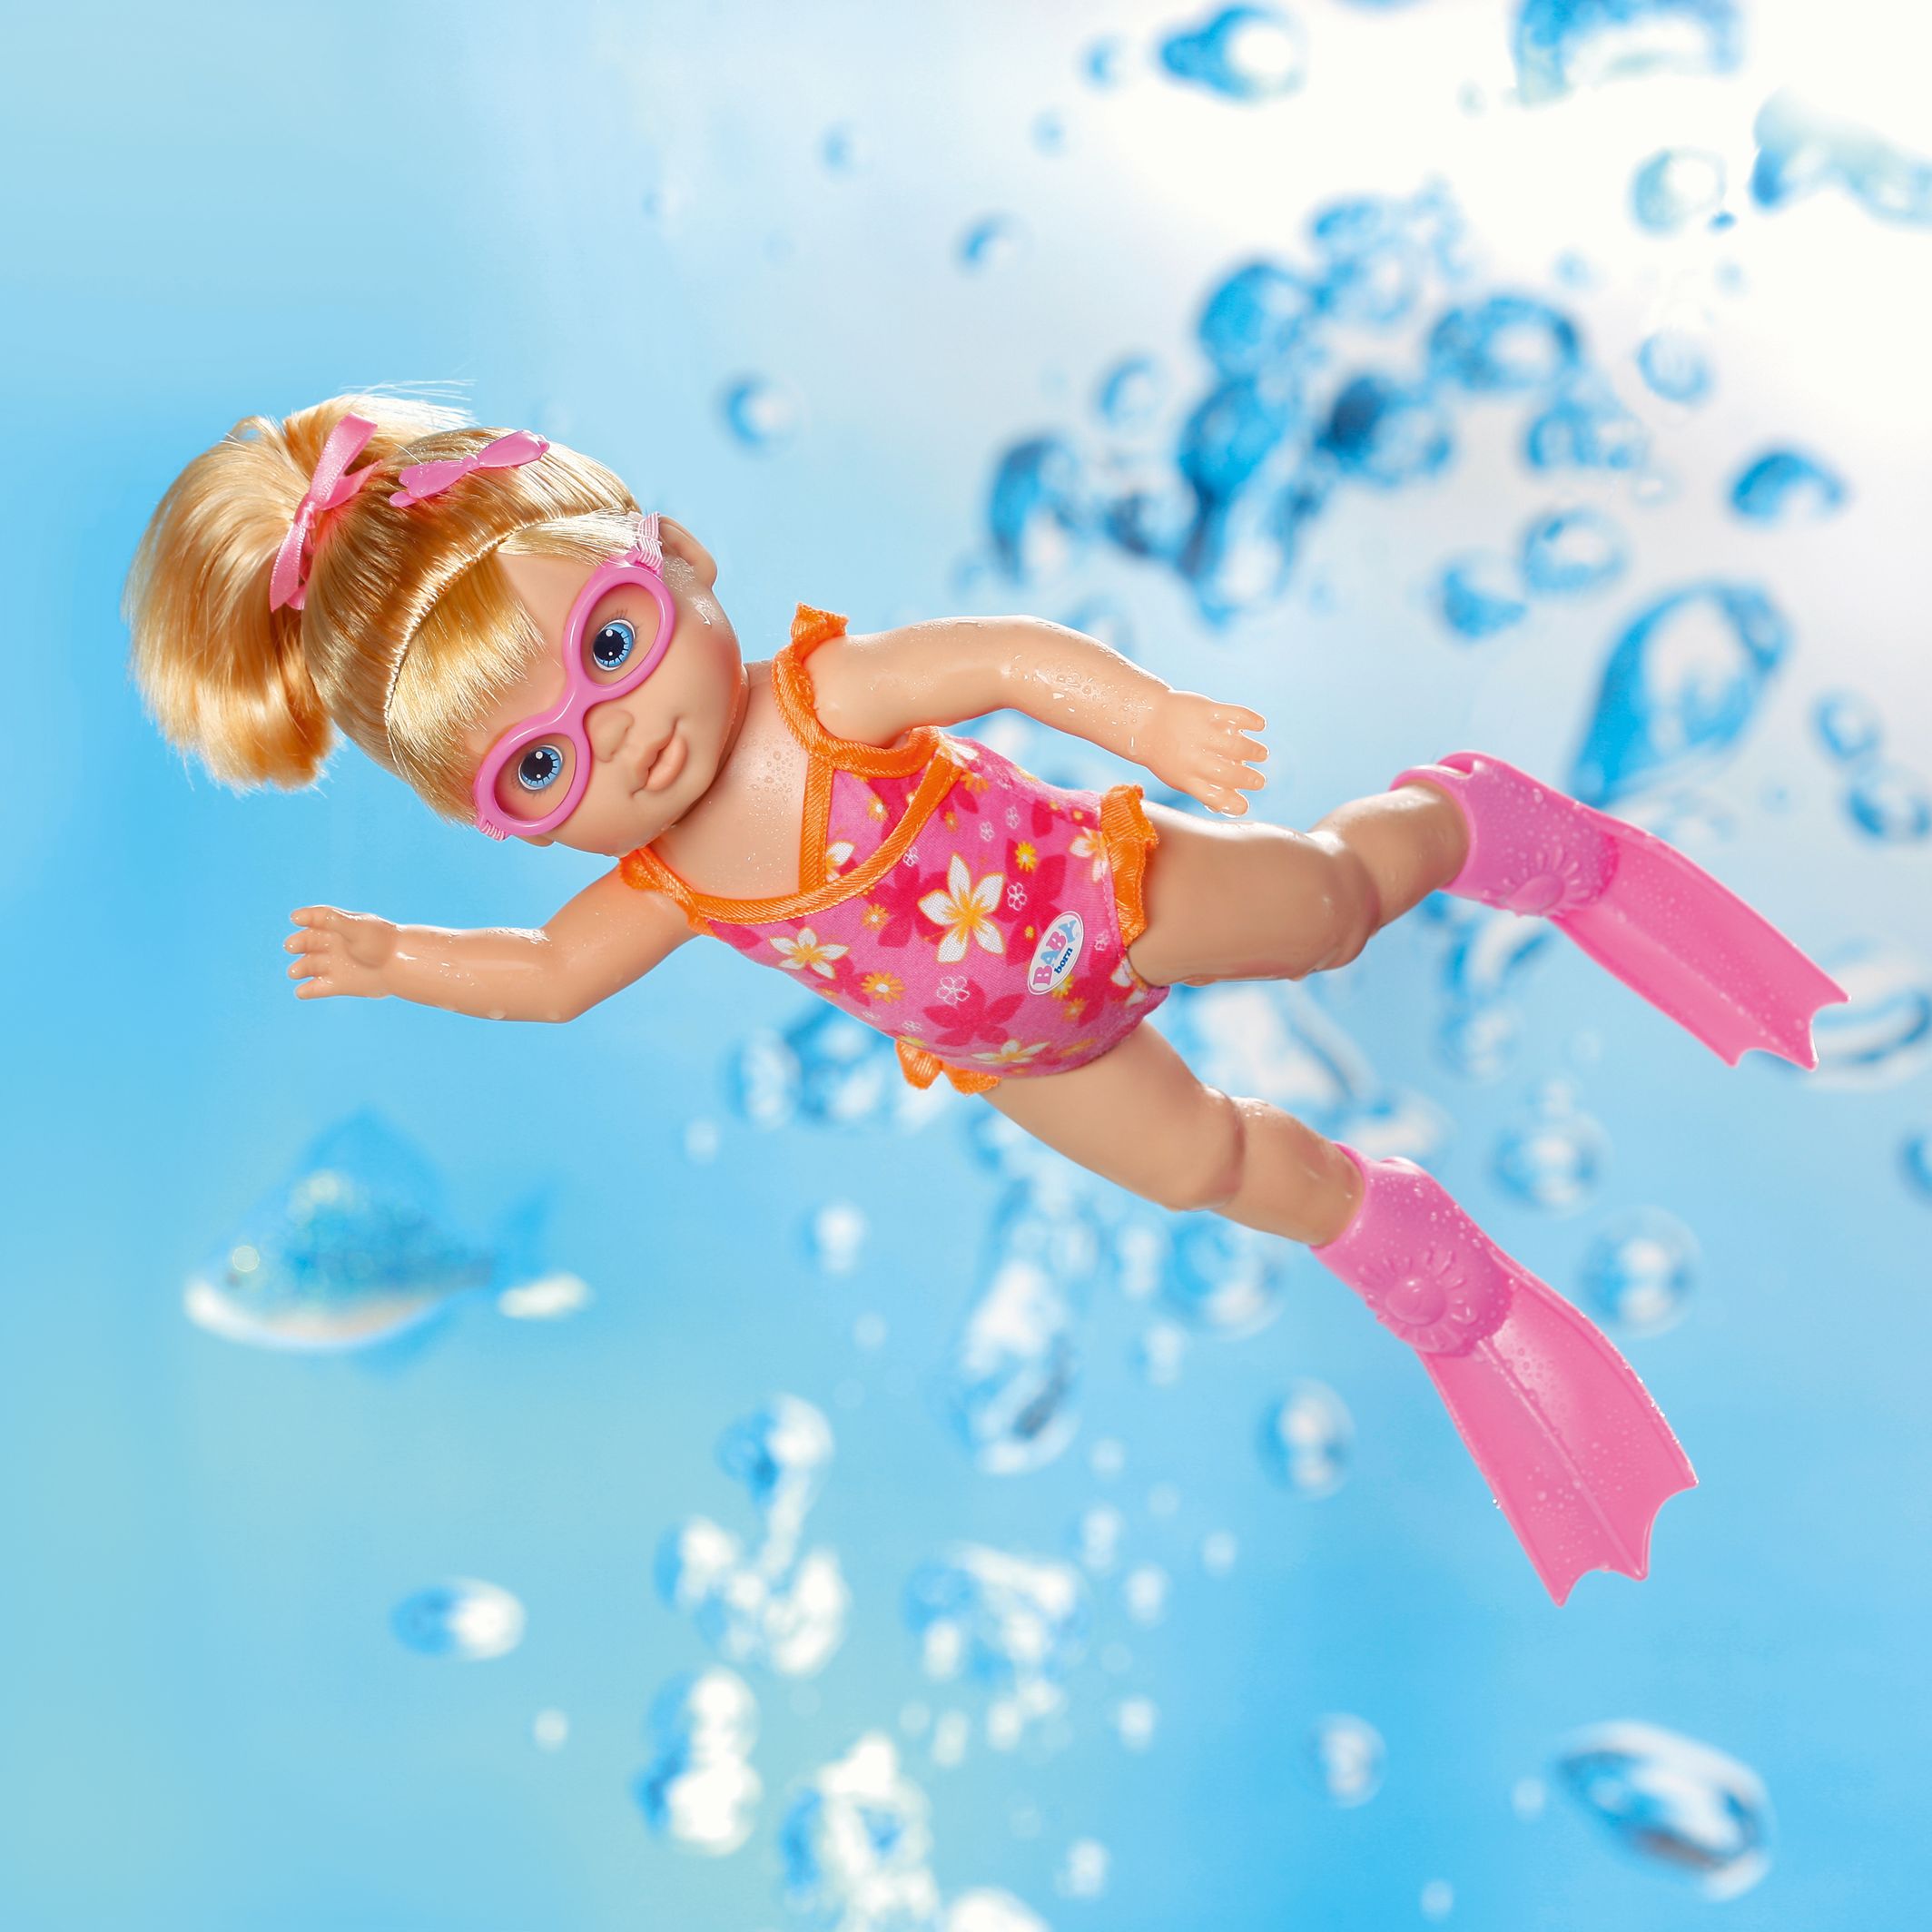 doll that can swim